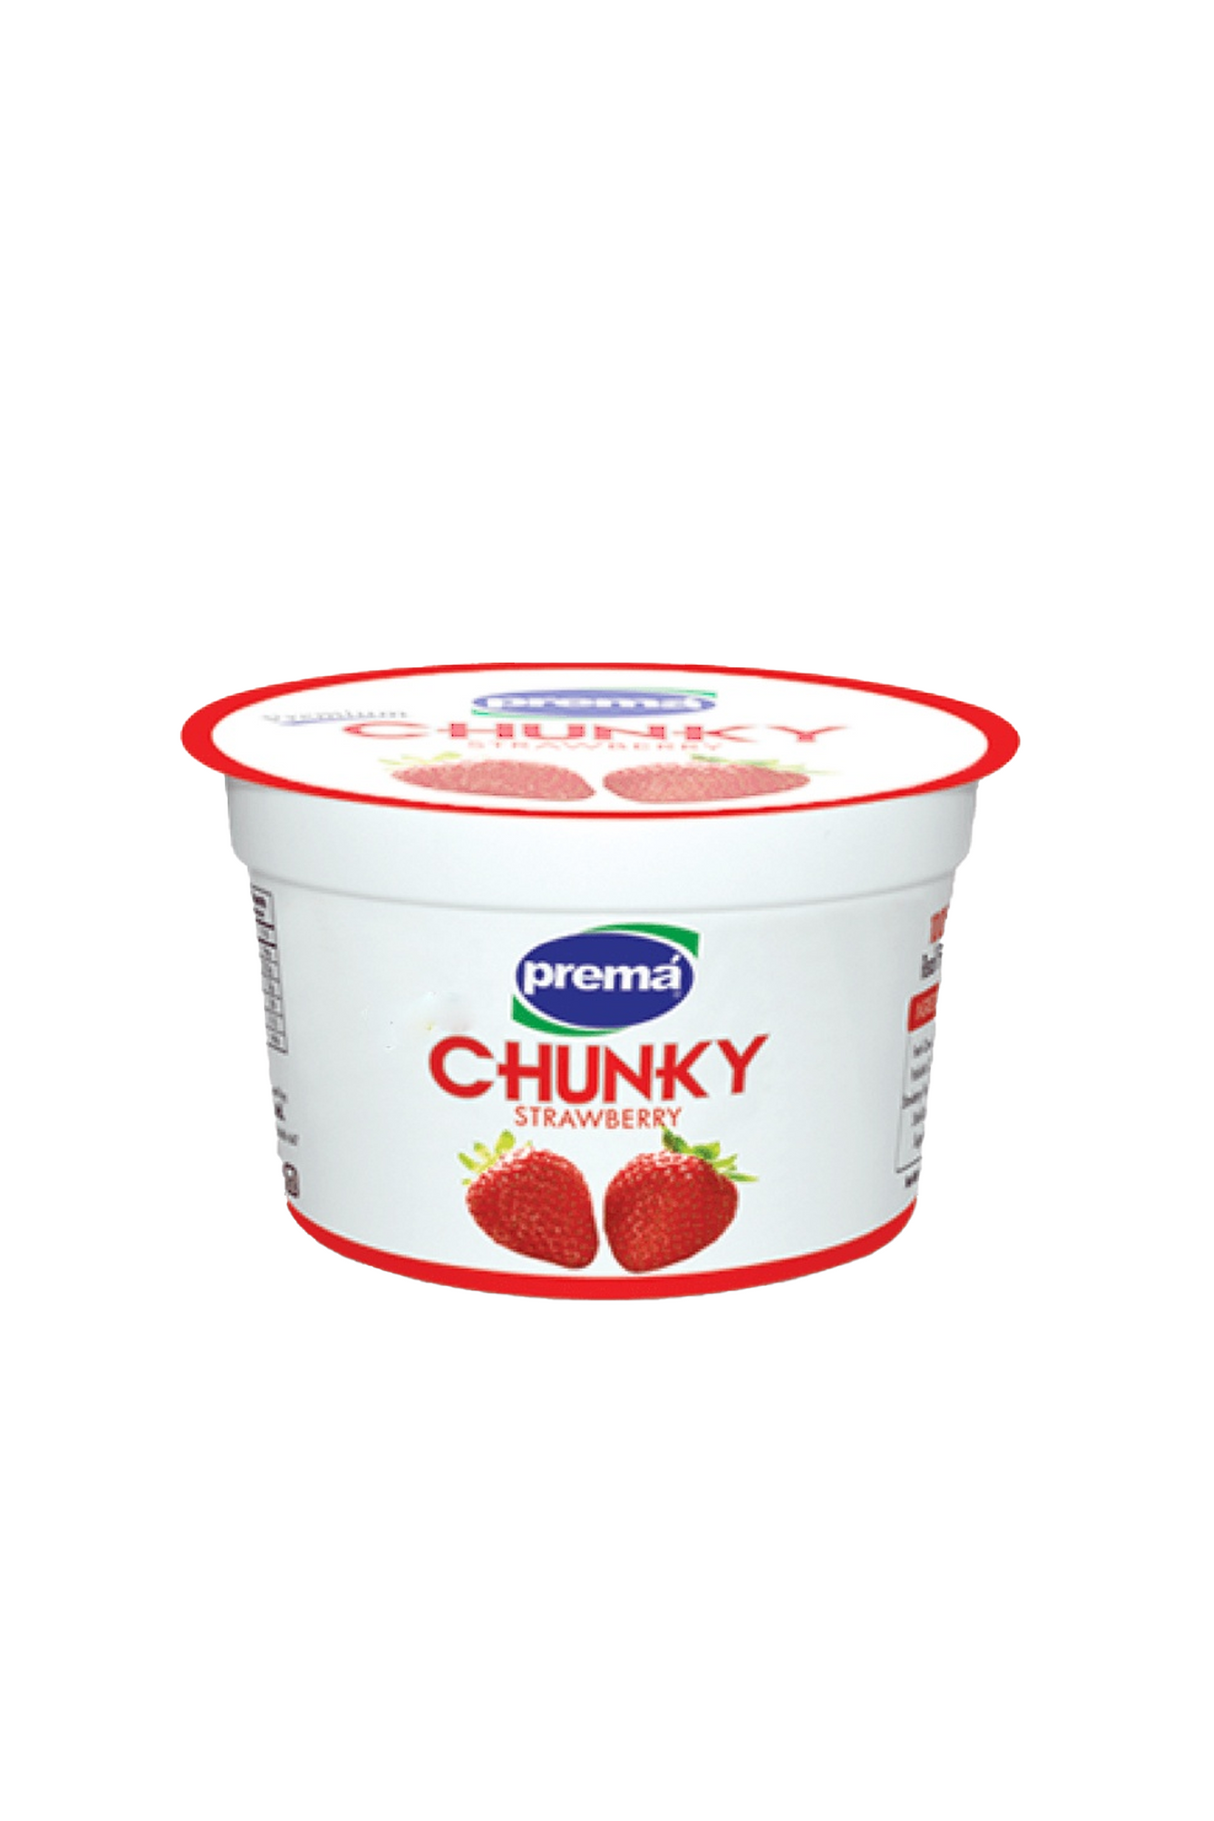 prema yogurt strawberry chunky 90g